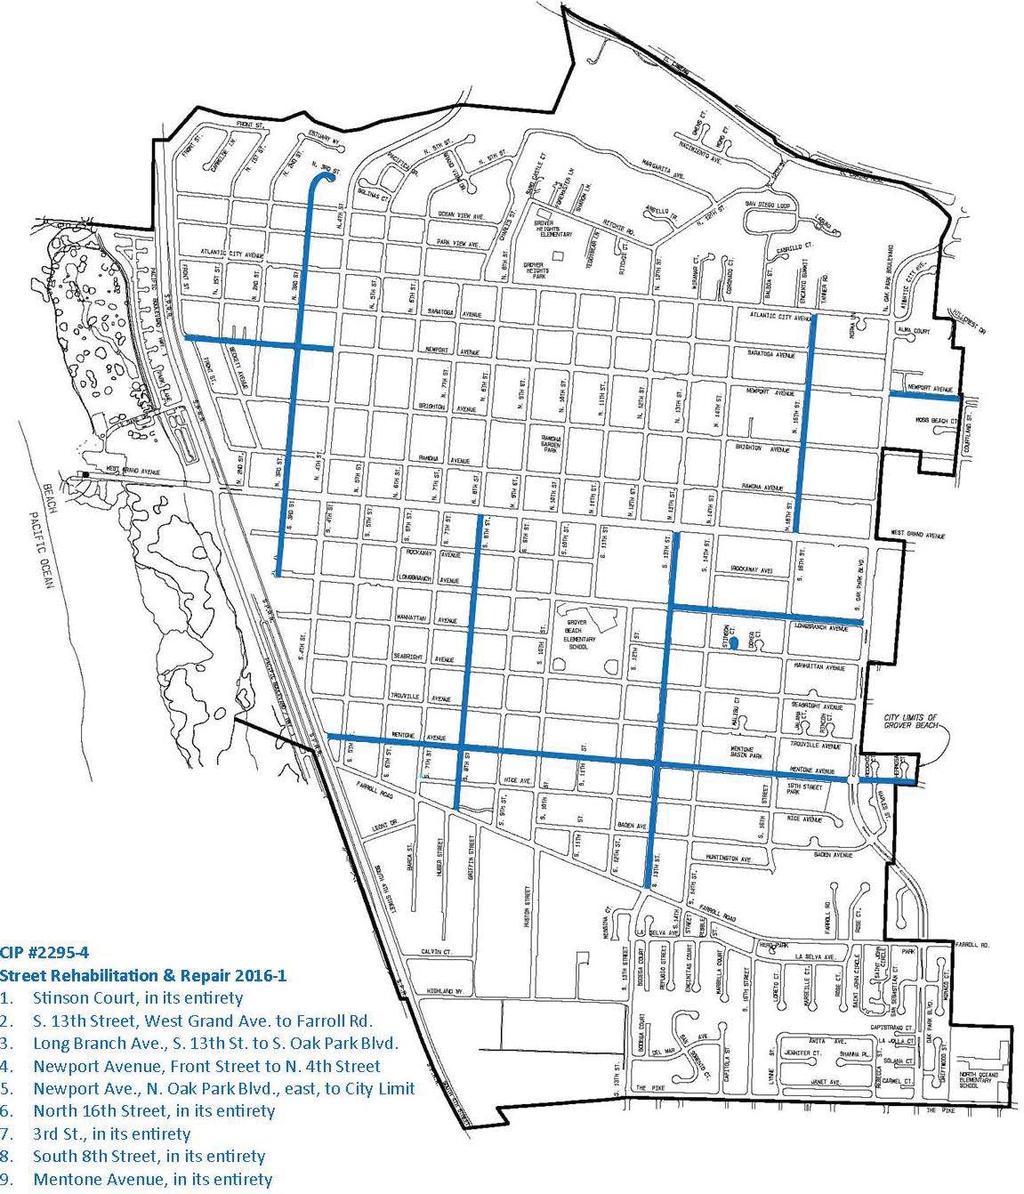 STREETS/STORM DRAINS CIP 2295-4: STREET REHABILITATION AND